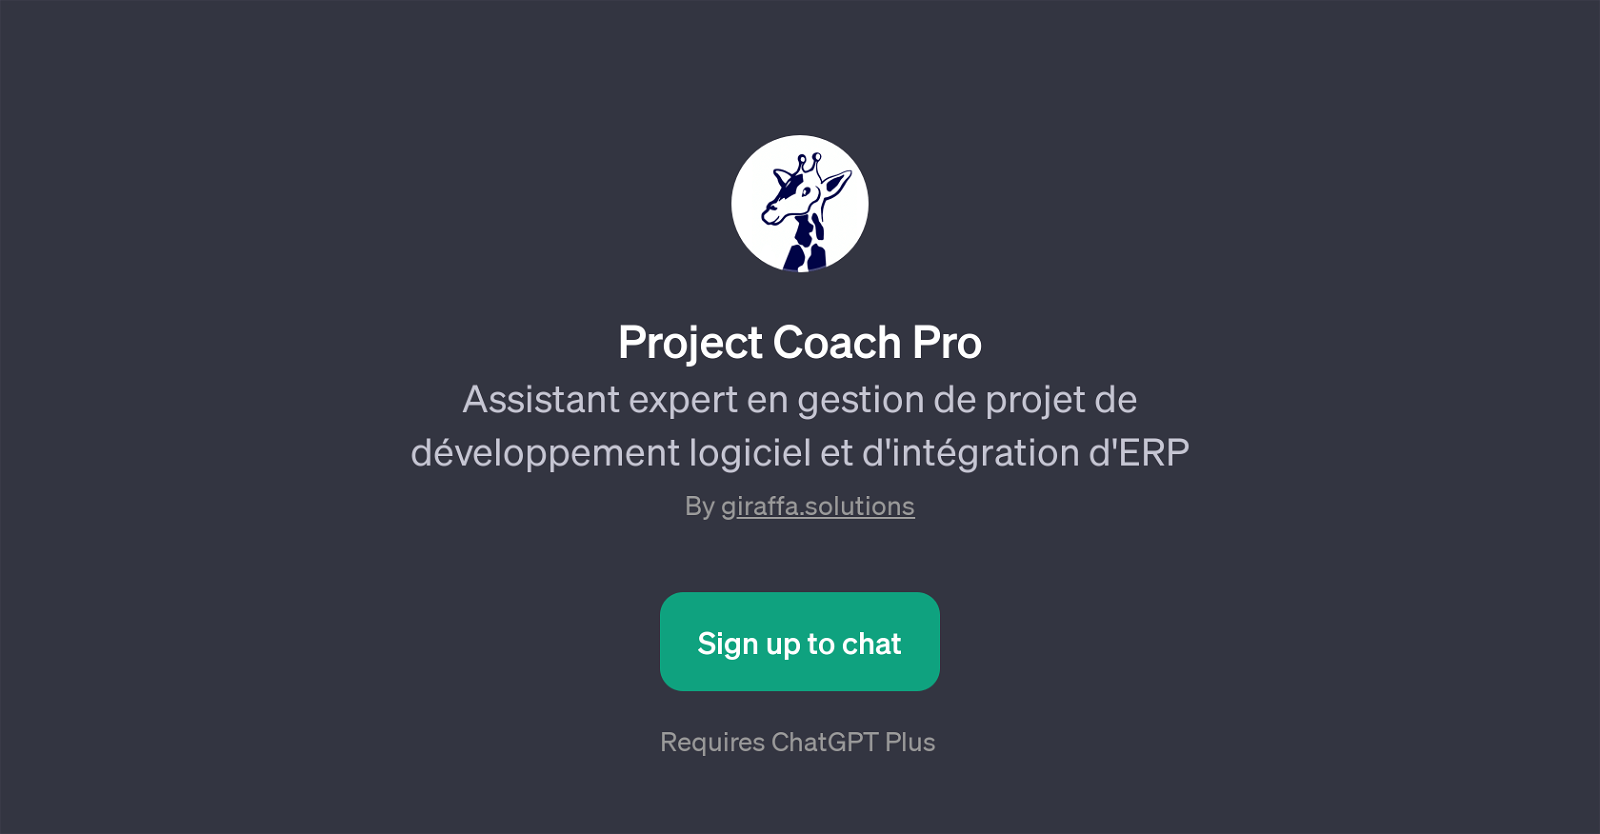 Project Coach Pro website